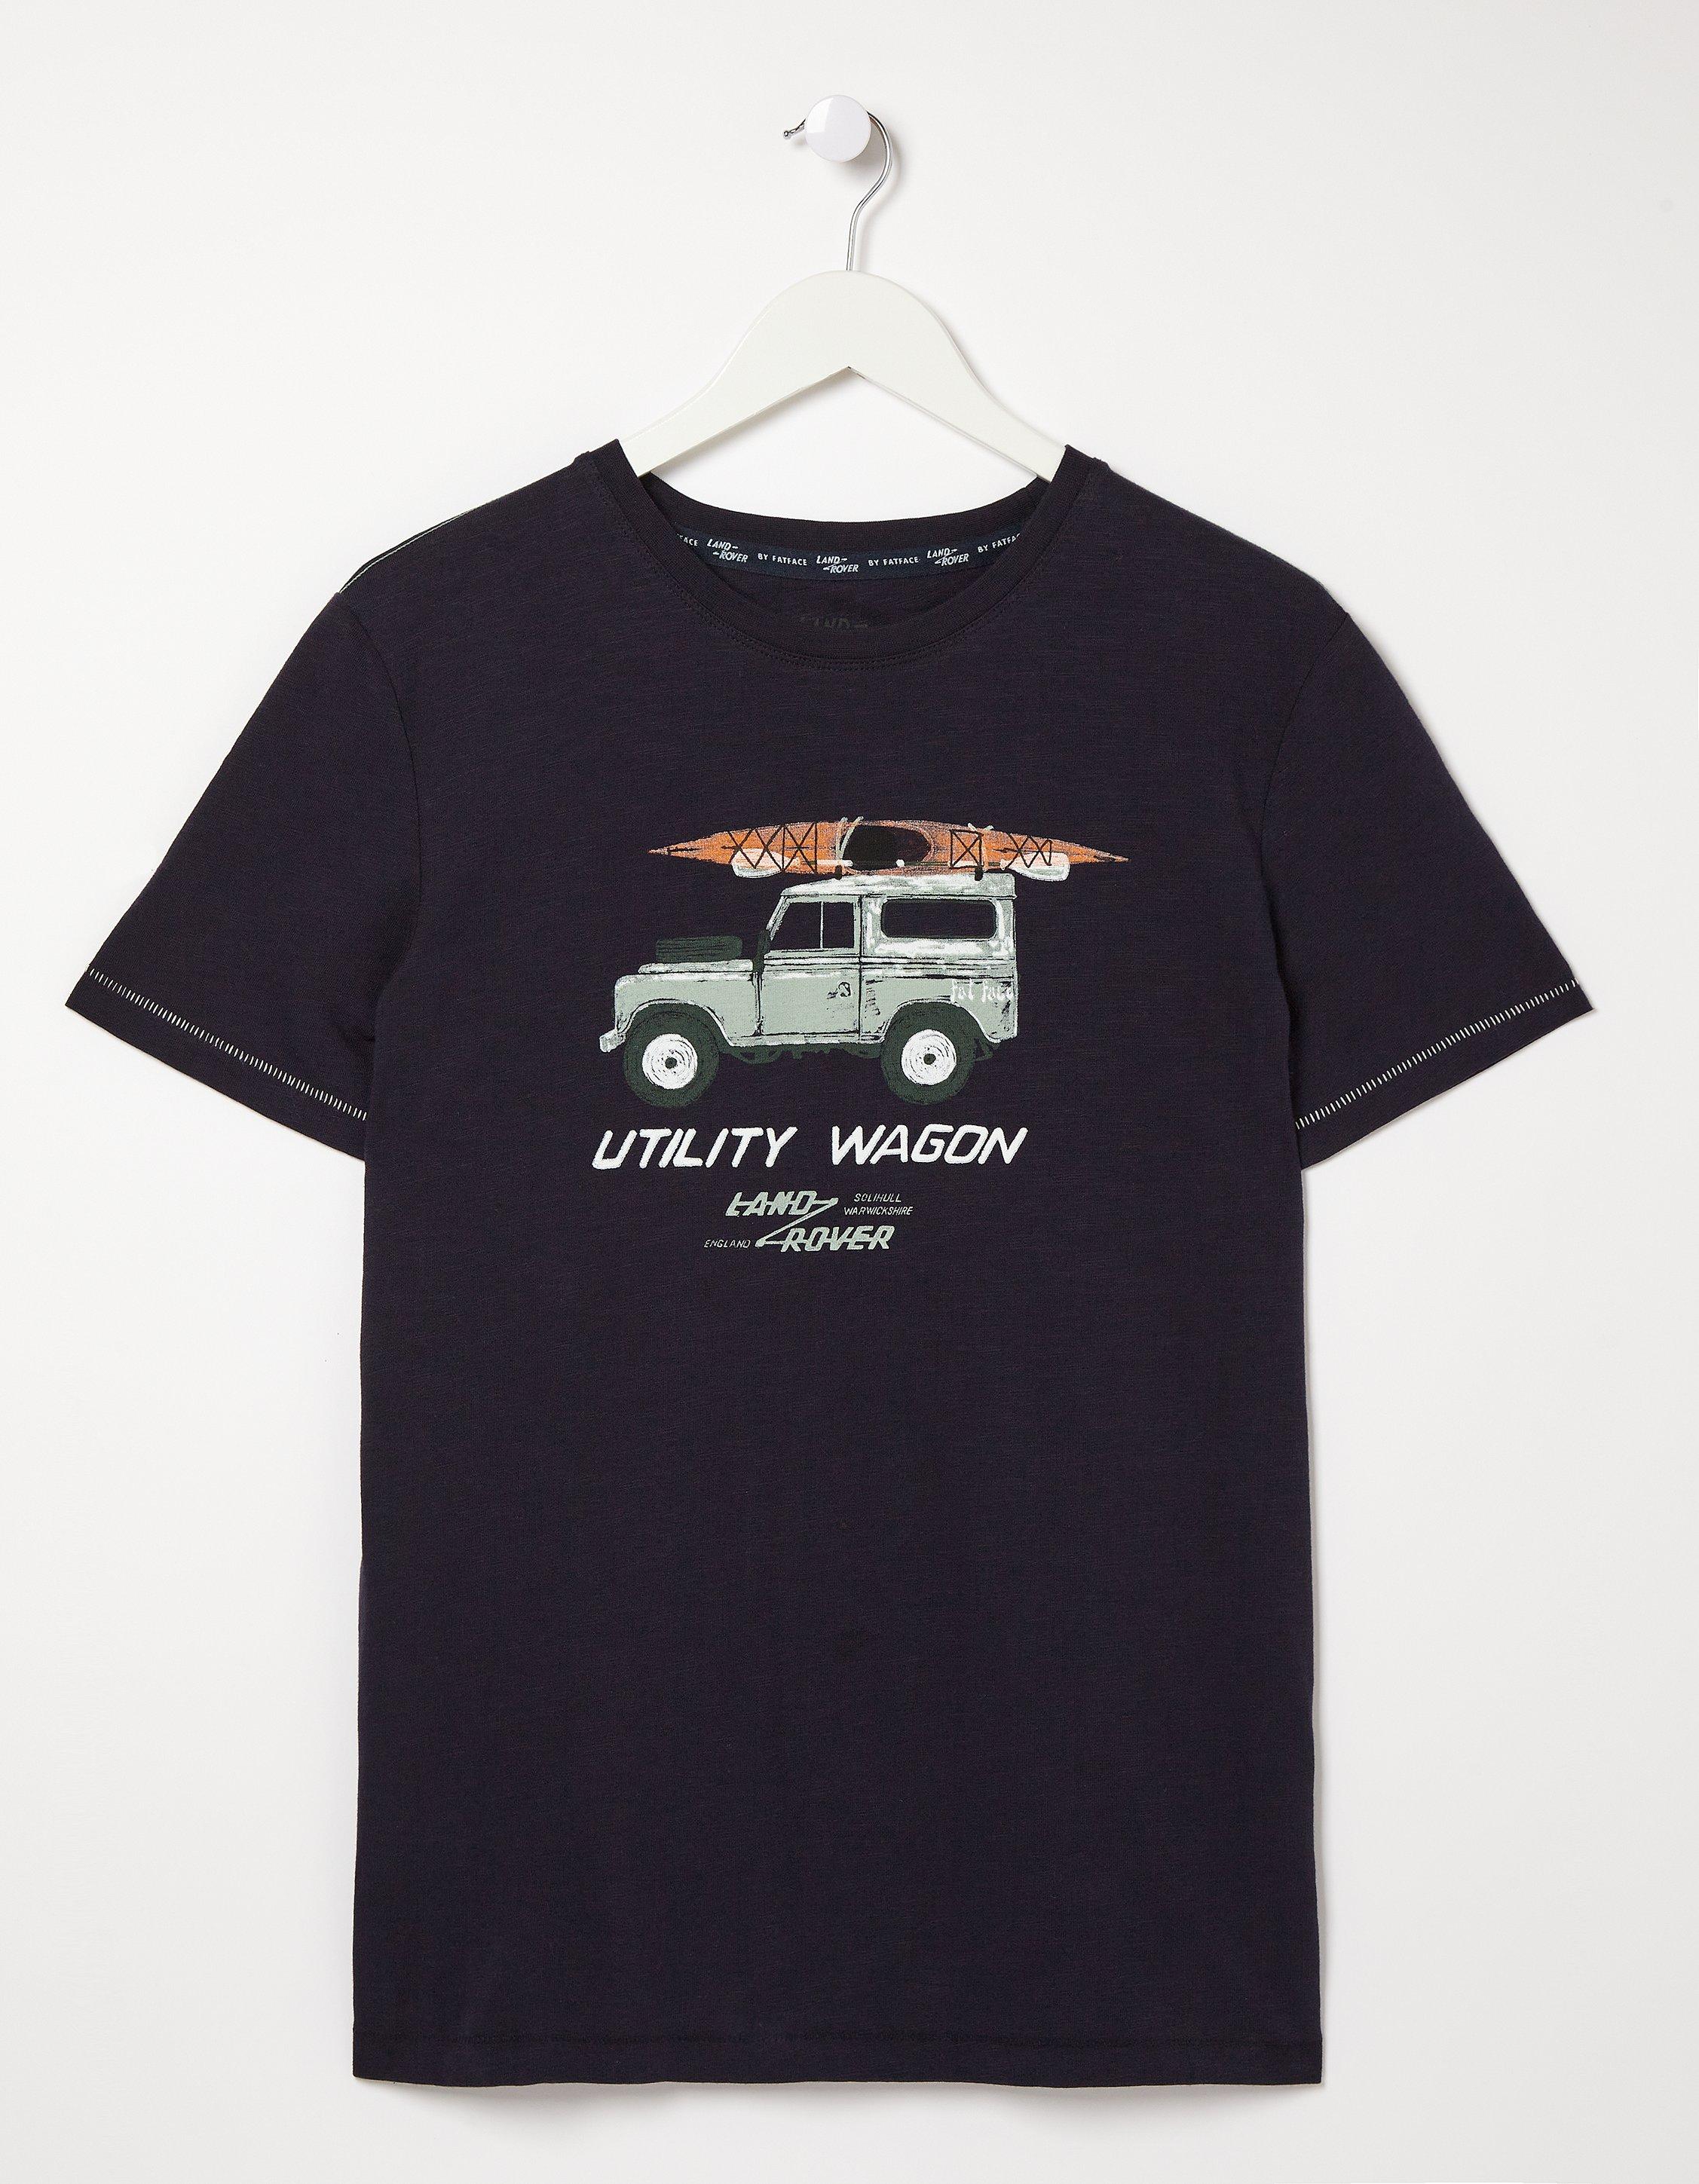 Land Rover Utility Wagon Graphic T-Shirt, T-Shirts | FatFace.com